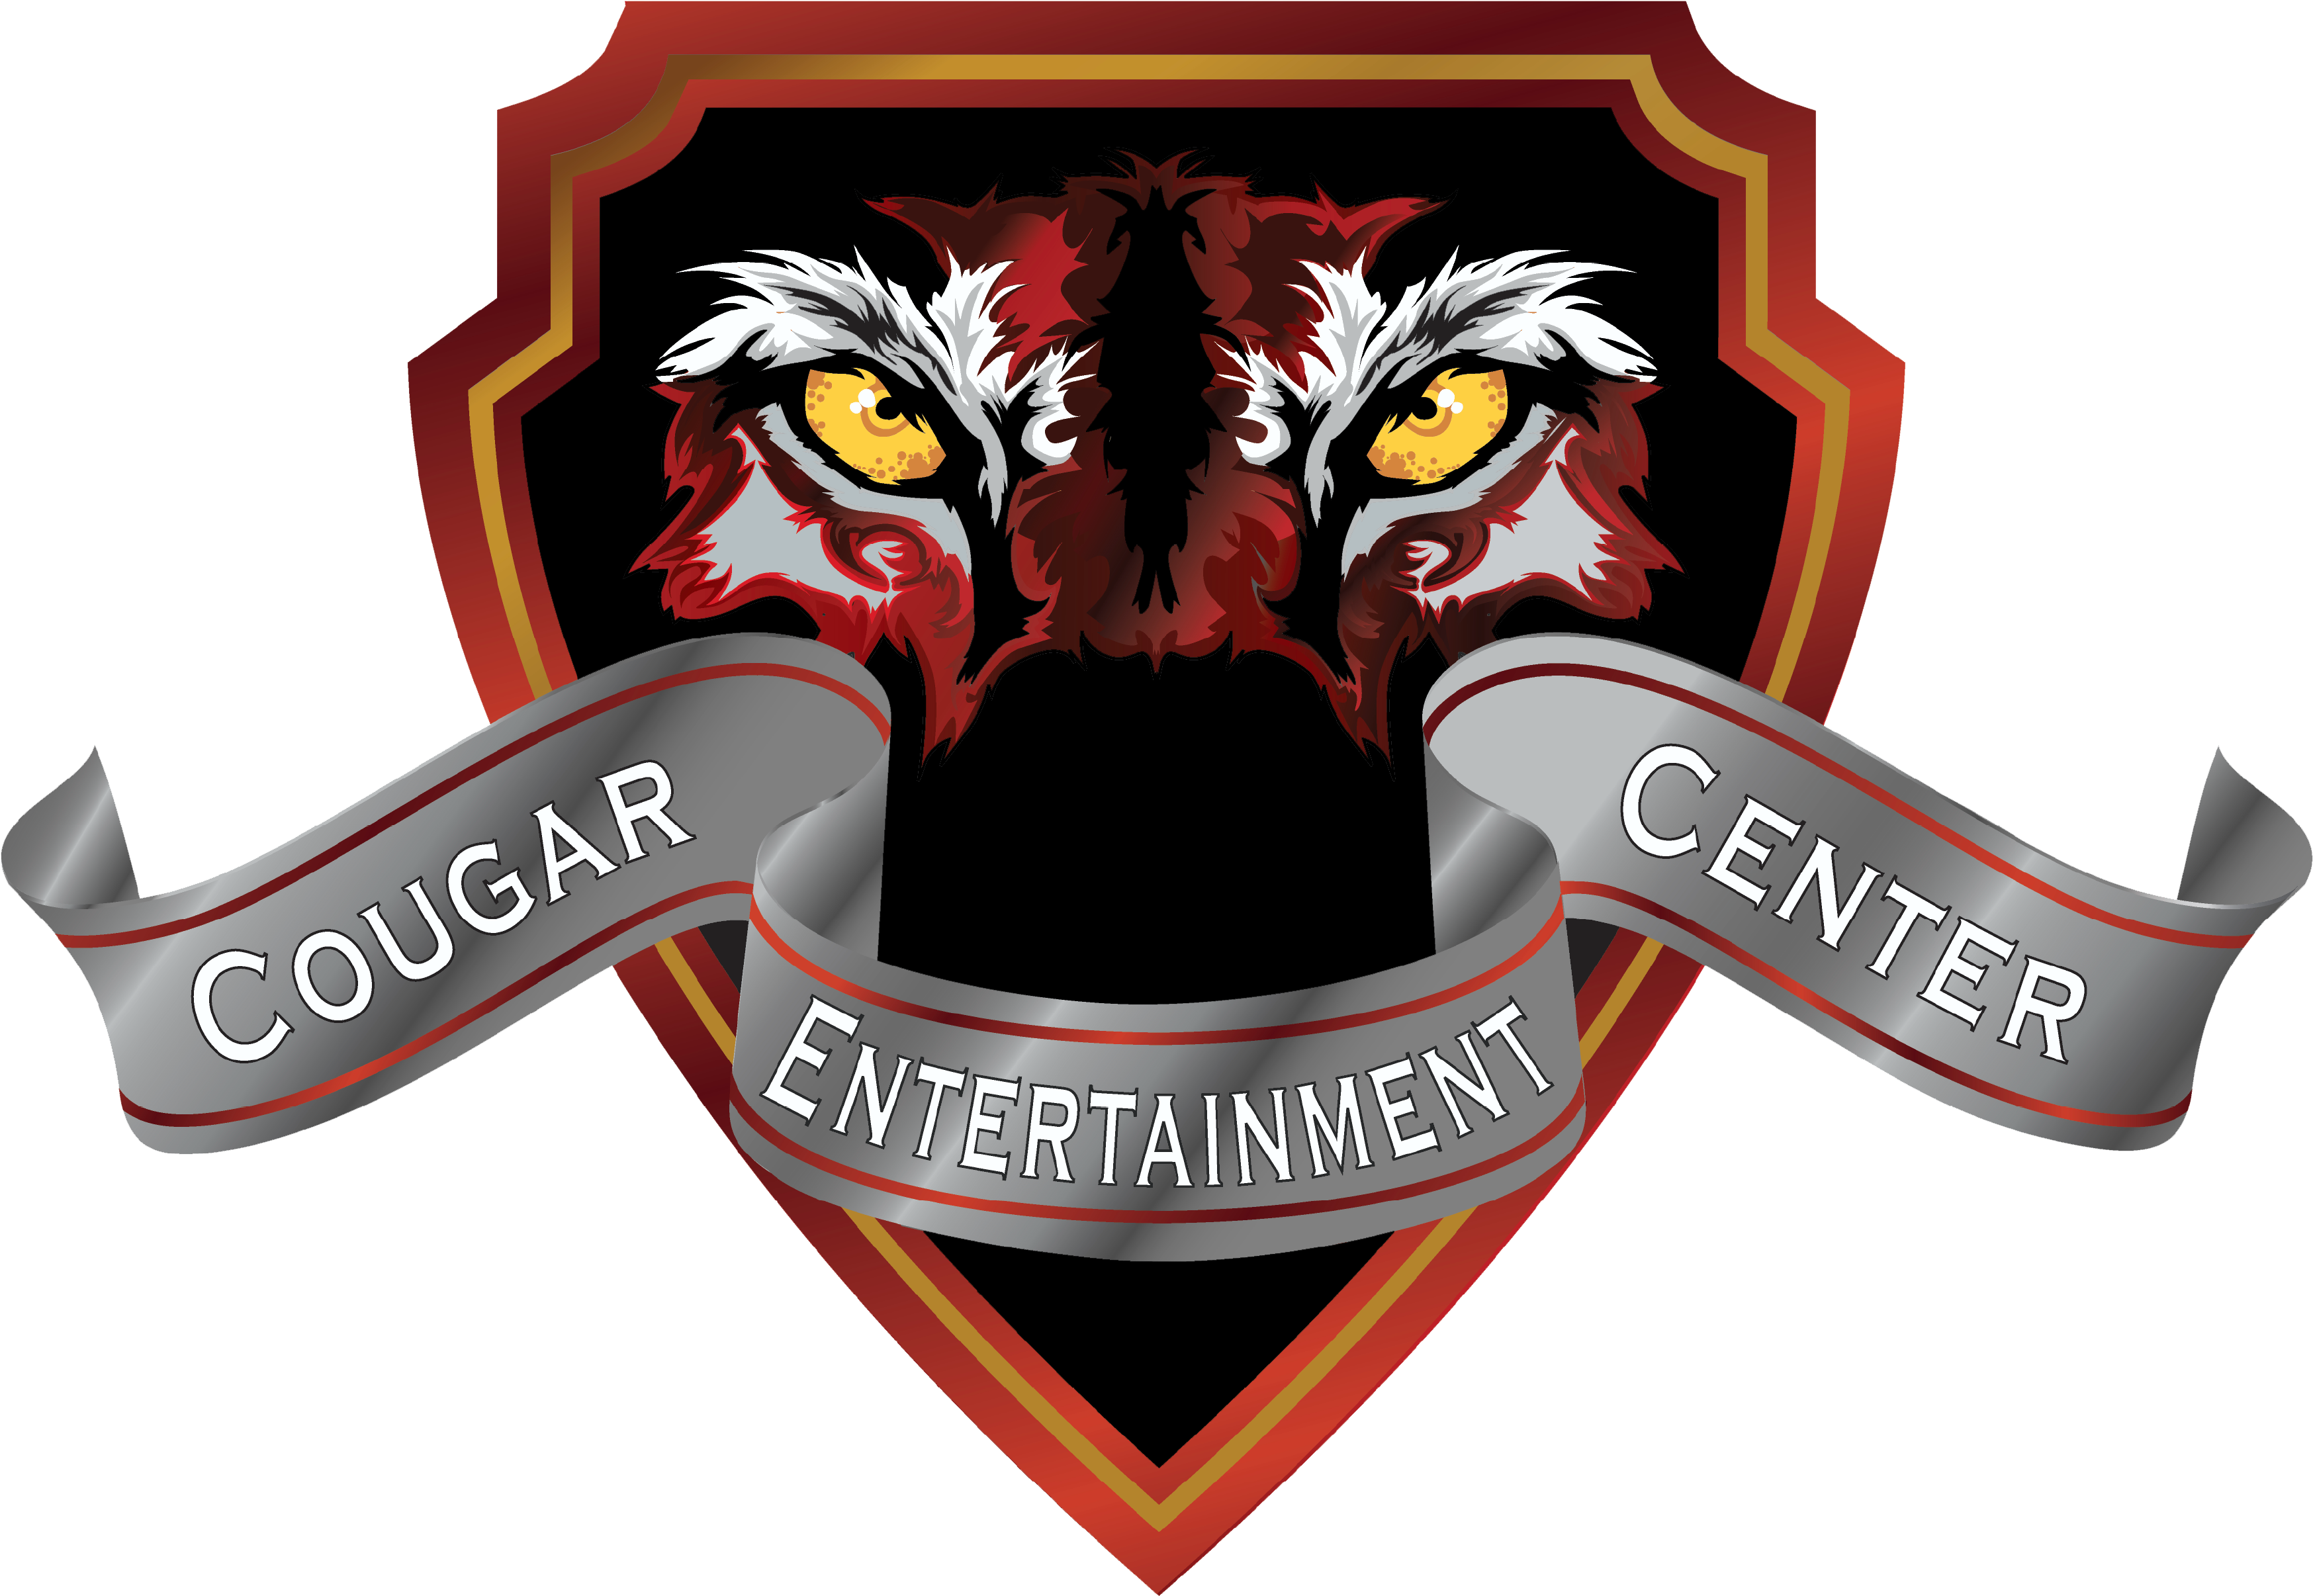 Cougar Entertainment Center Logo PNG image